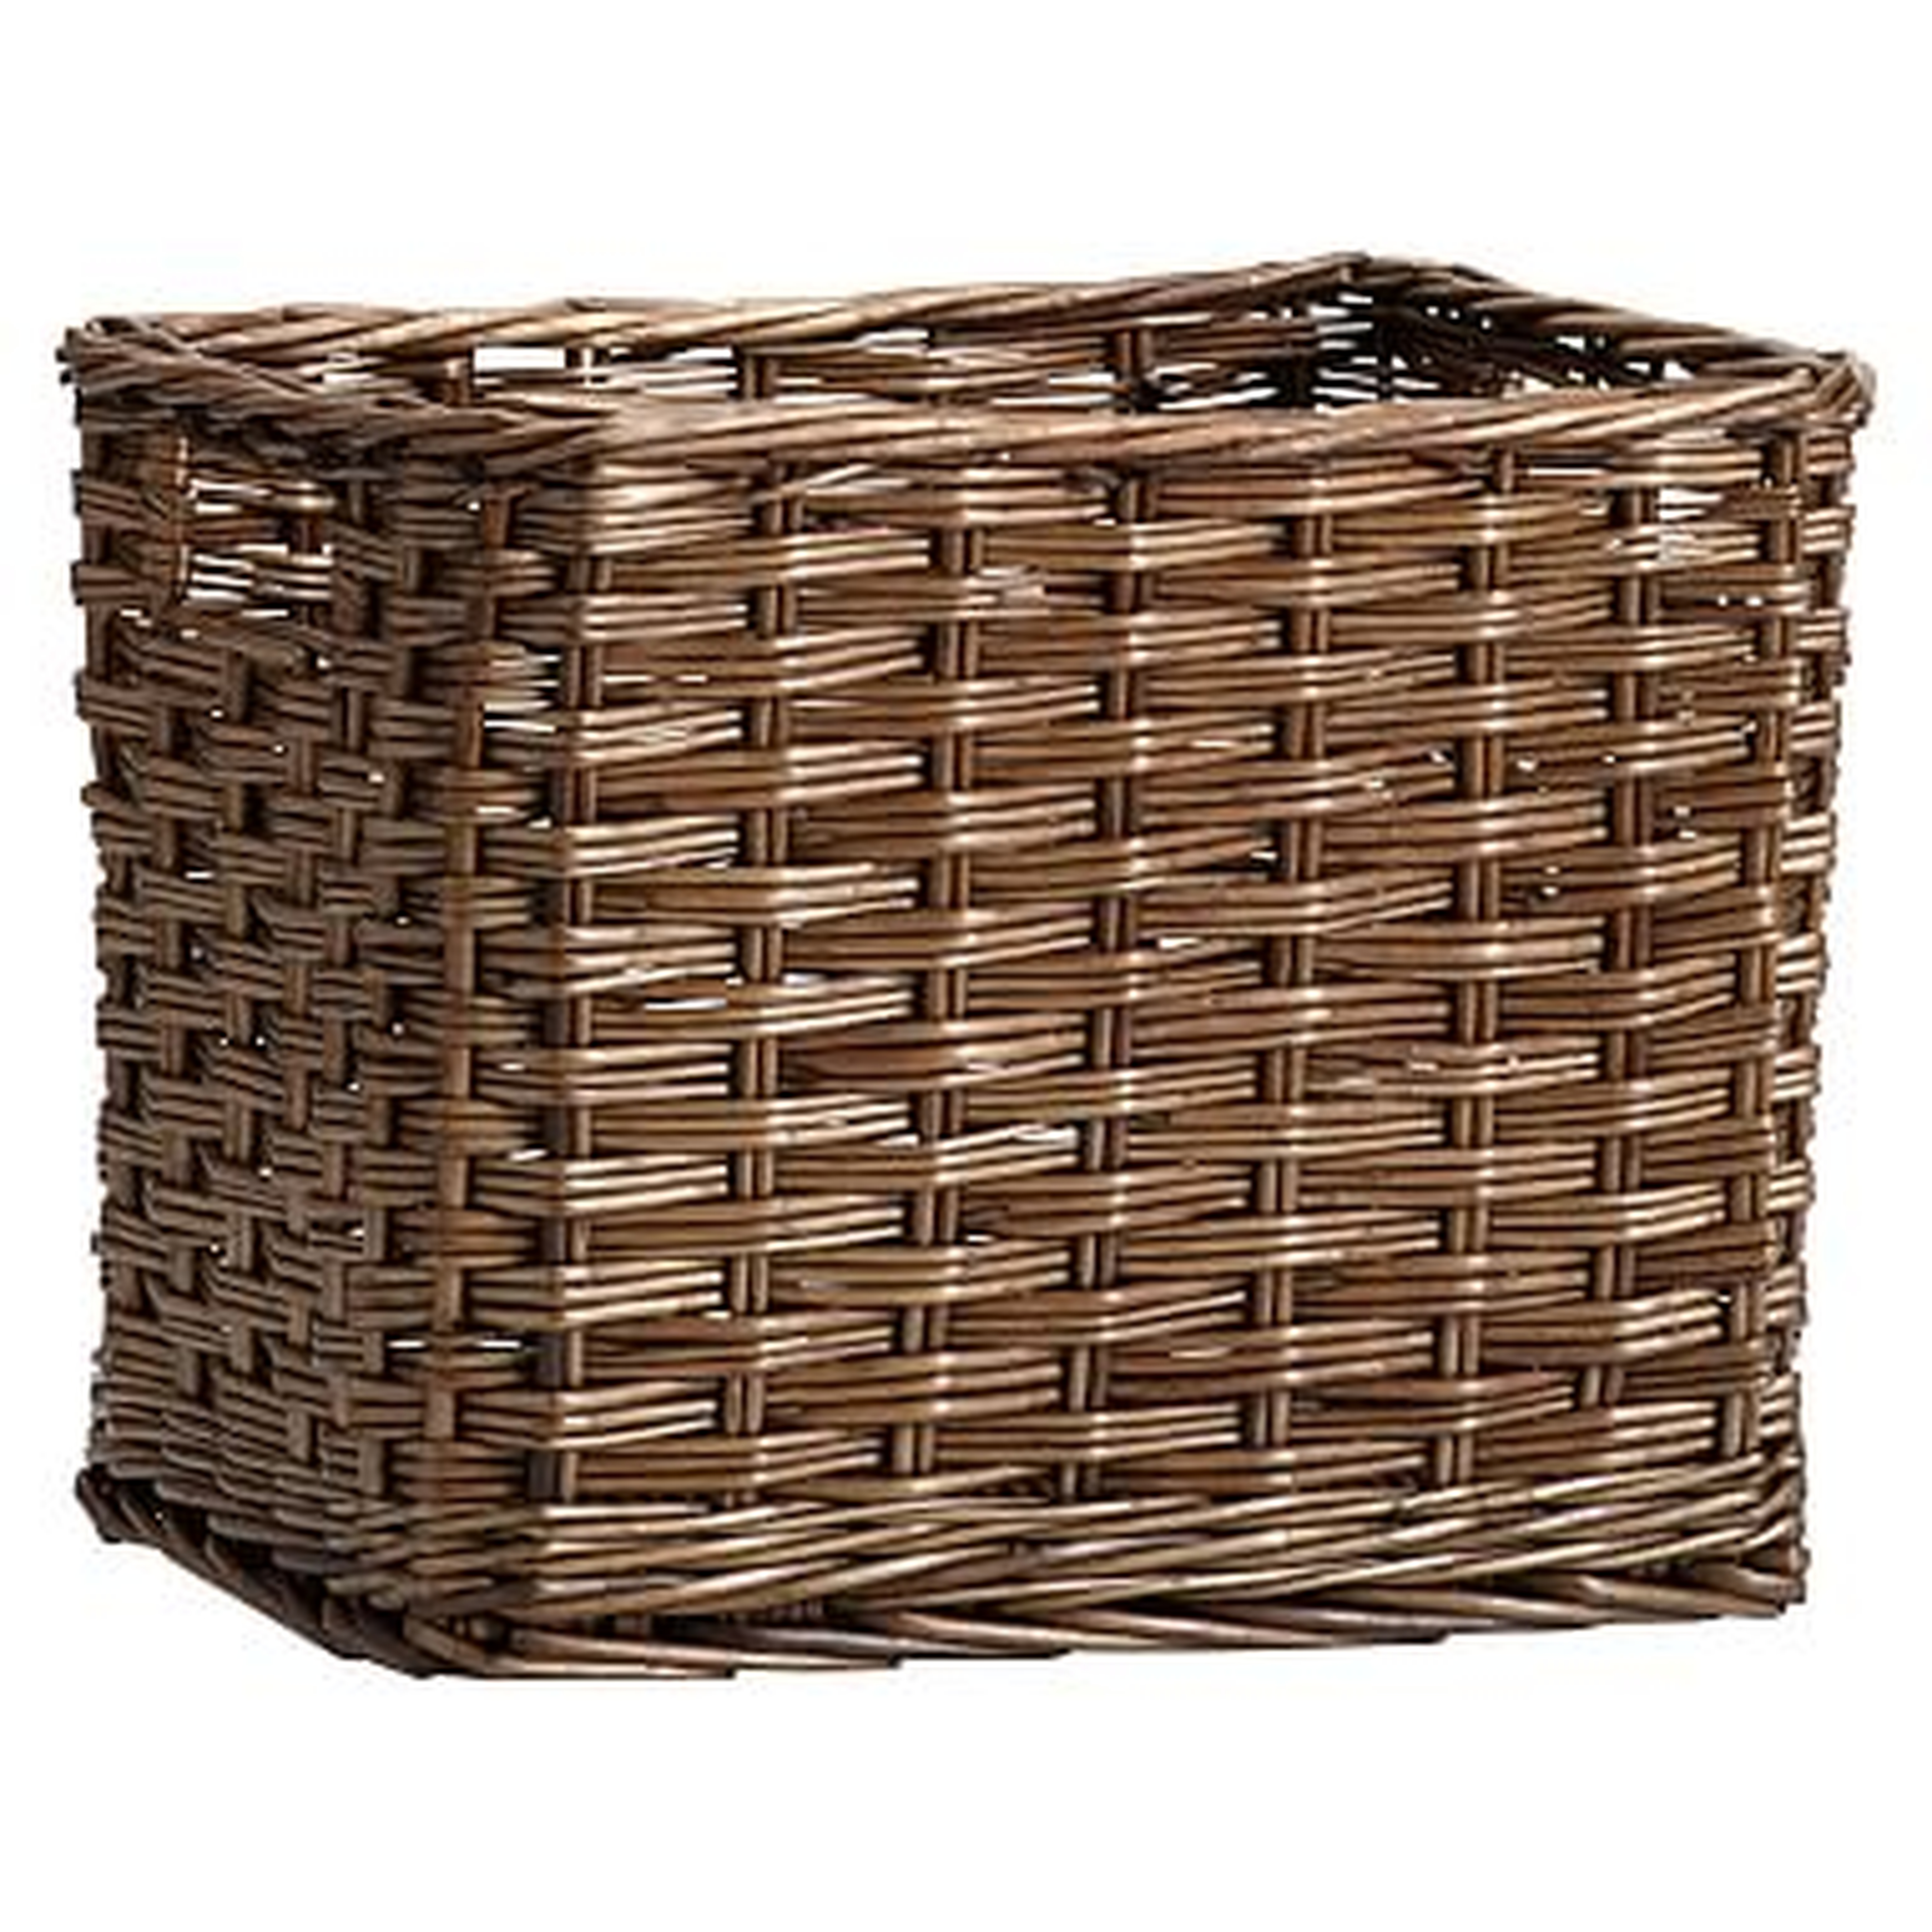 Woven Wicker Baskets, Java, Single, Medium - Pottery Barn Teen